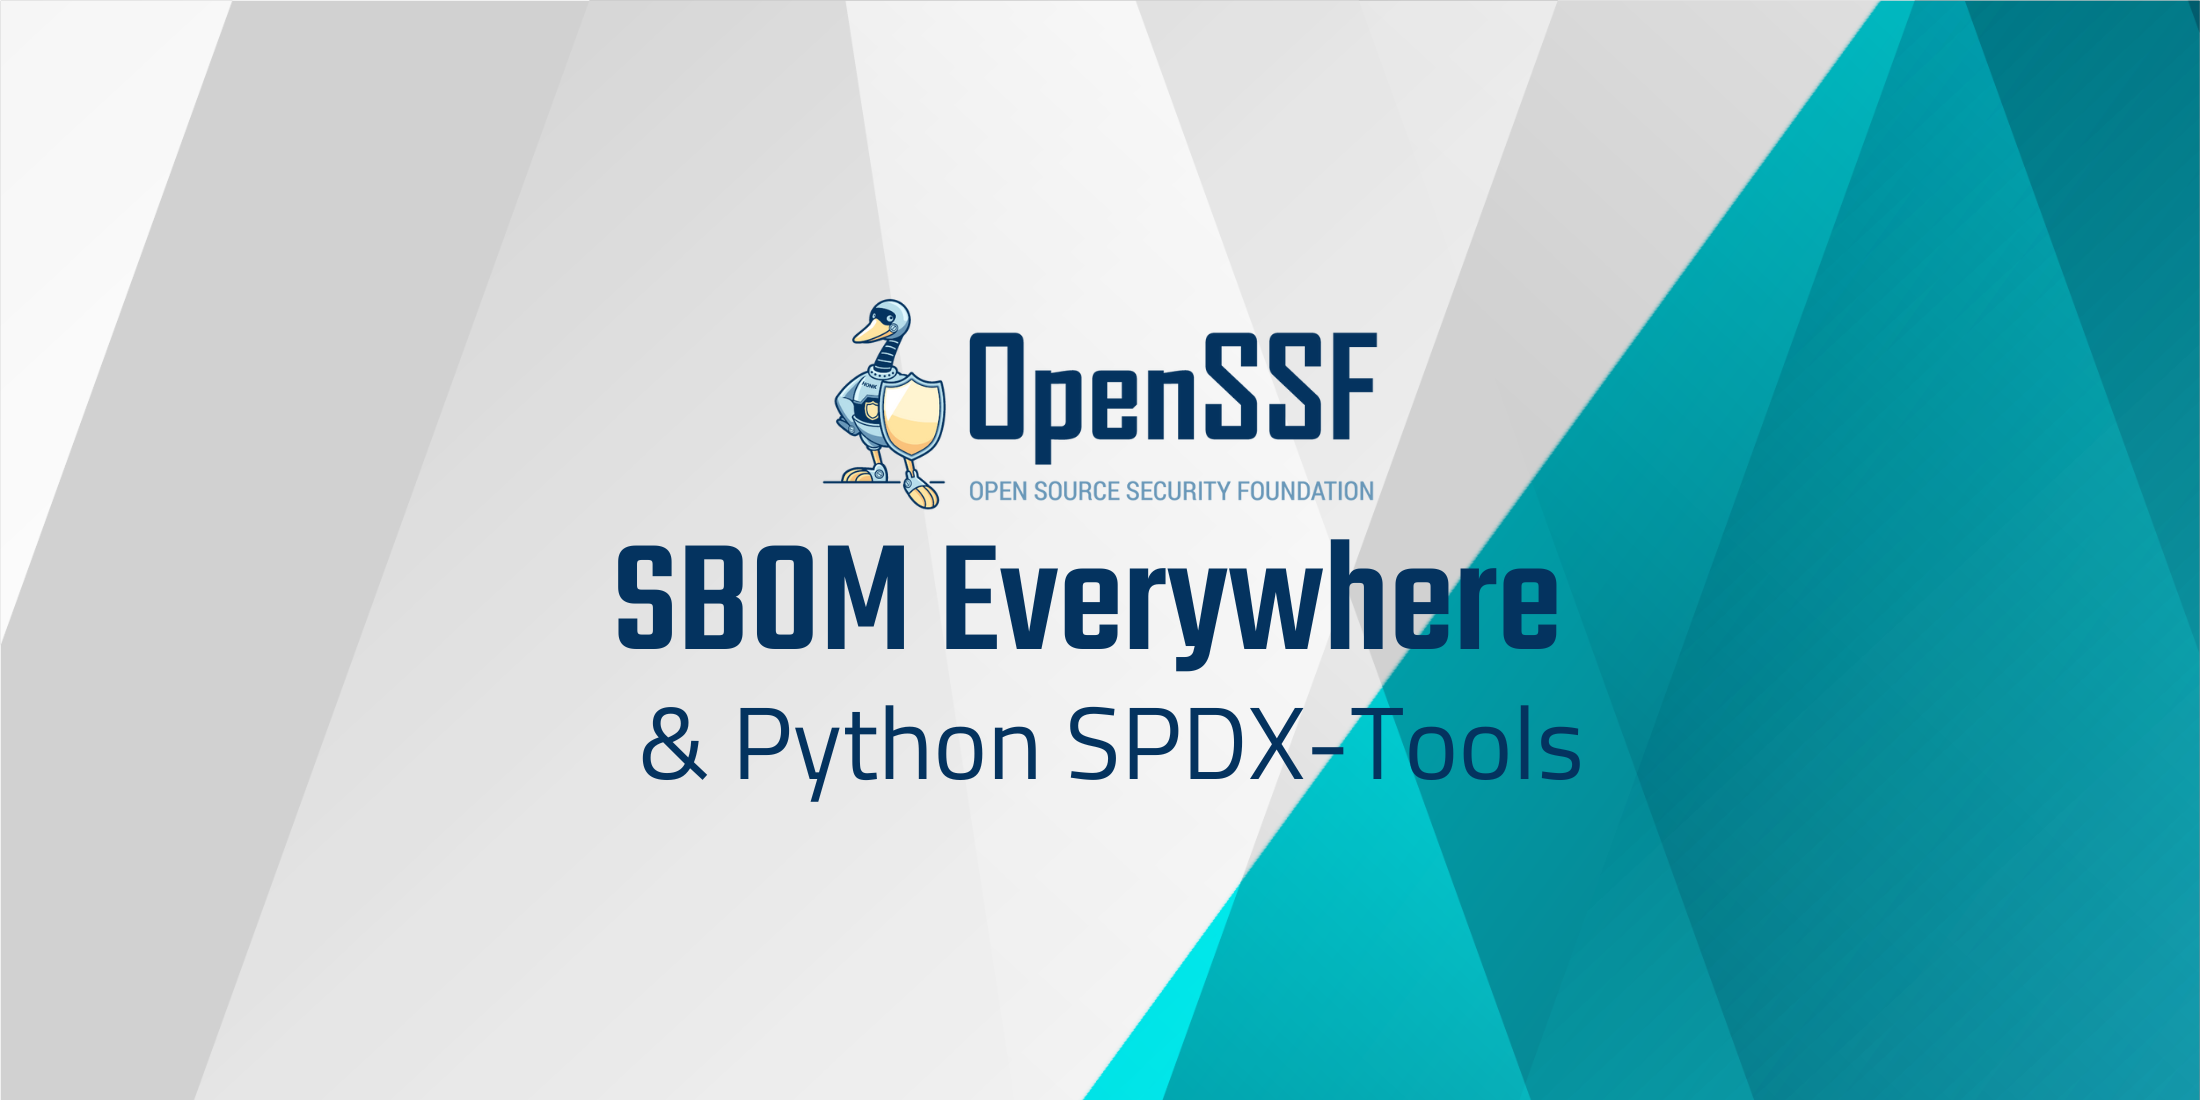 OpenSSF SBOM Everywhere Python SPDX-Tools